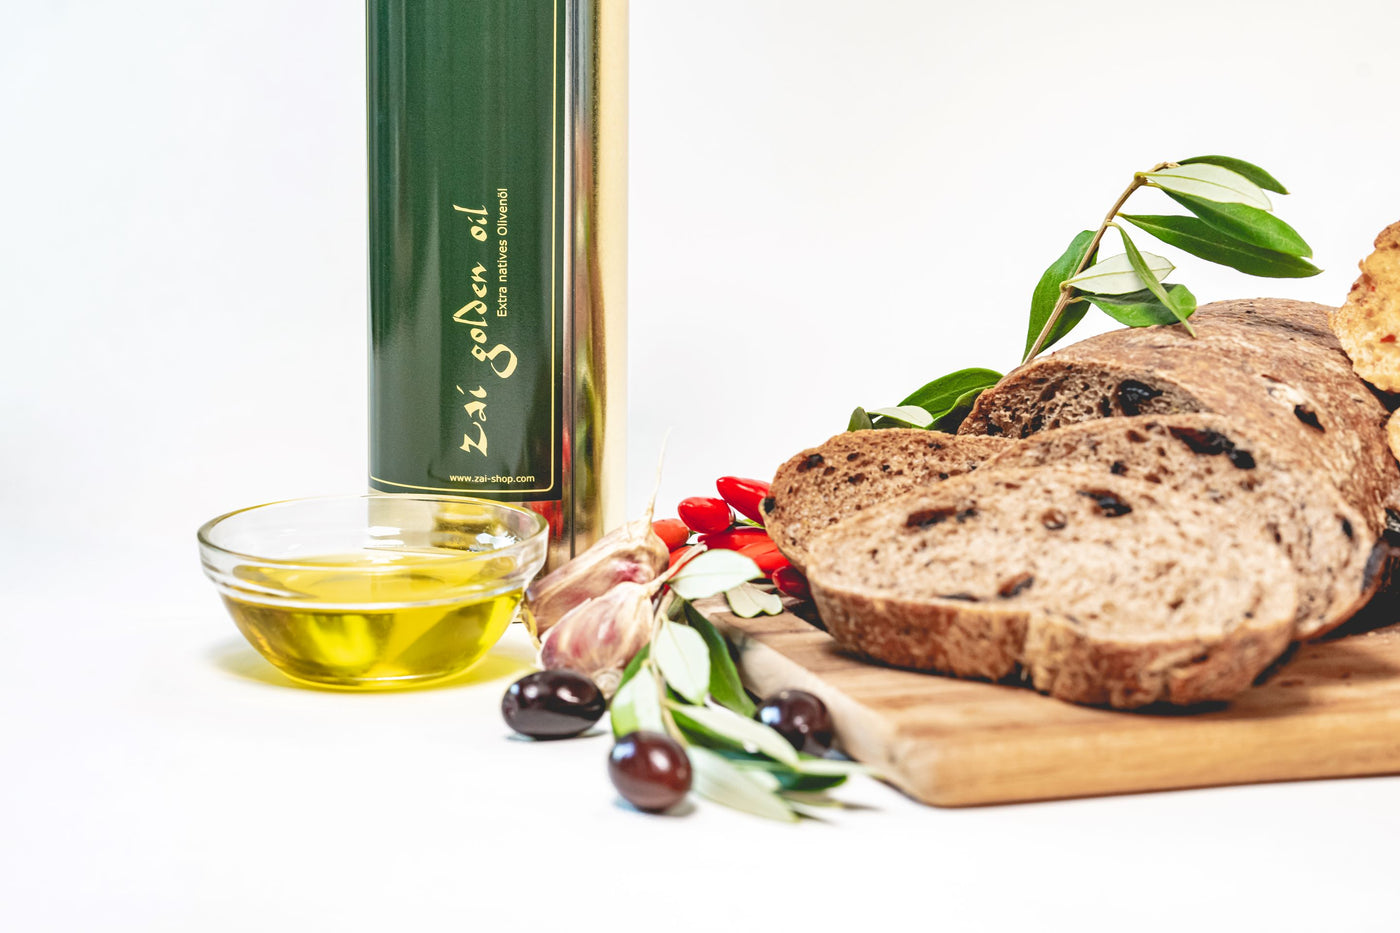 zai shop - Hochwertiges  Olivenöl